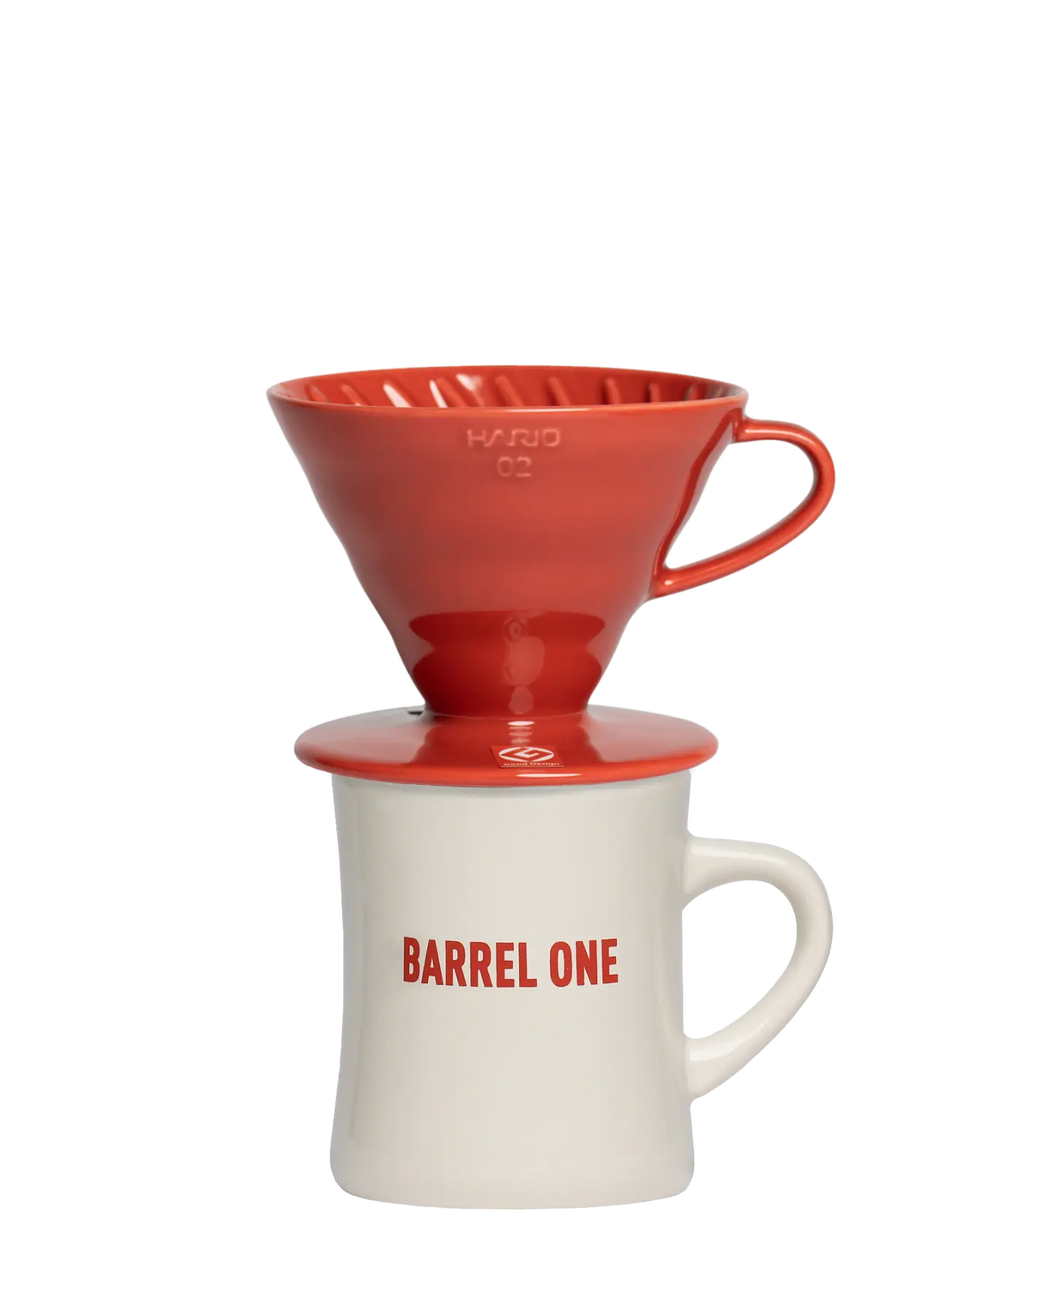 Hario V60 Coffee Dripper with the Barrel One Mug